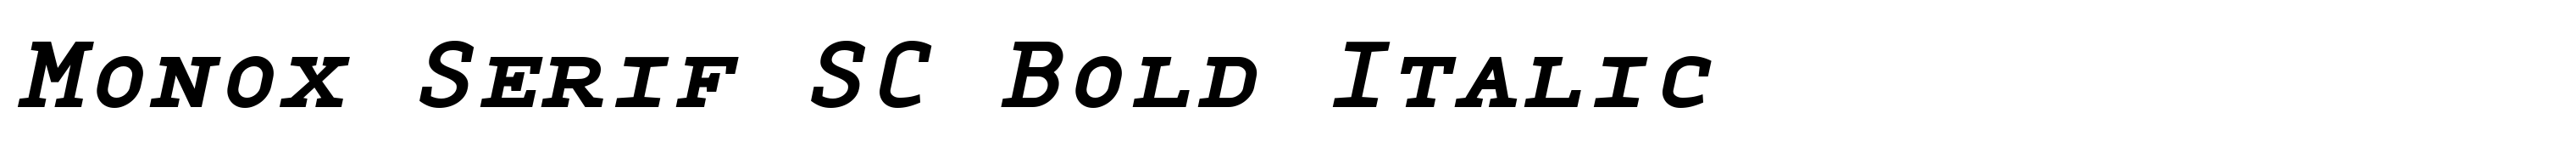 Monox Serif SC Bold Italic